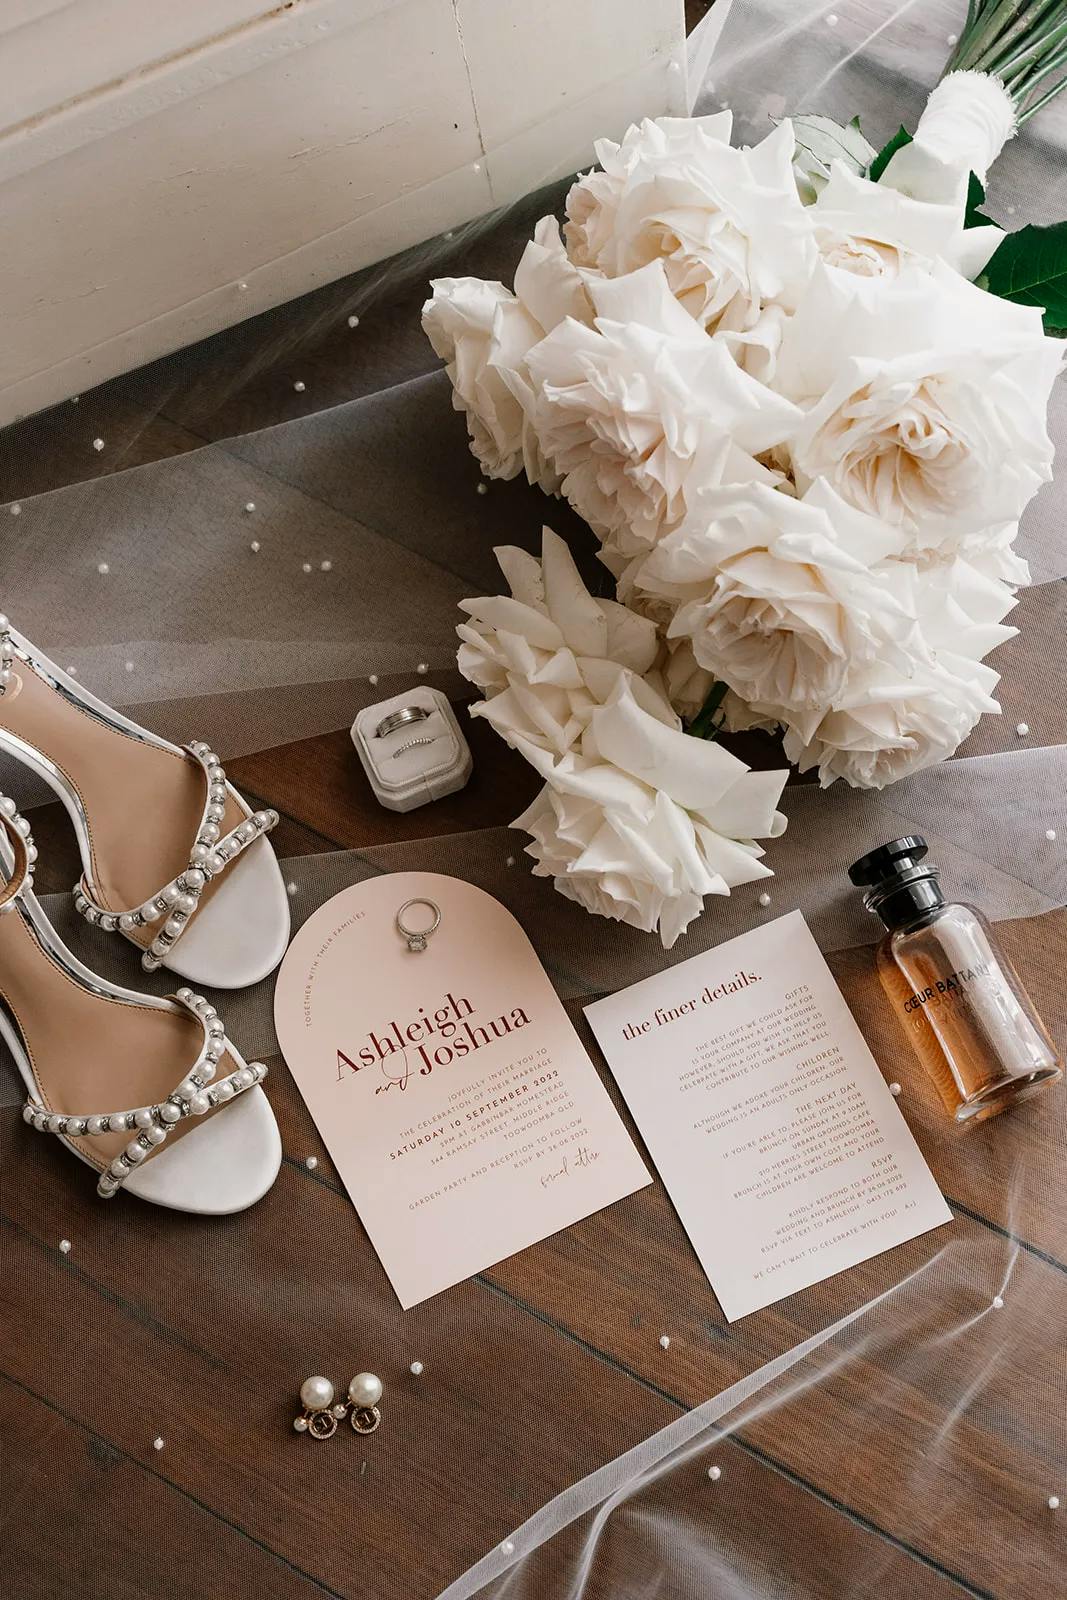 Wedding flowers, perfume and invitation